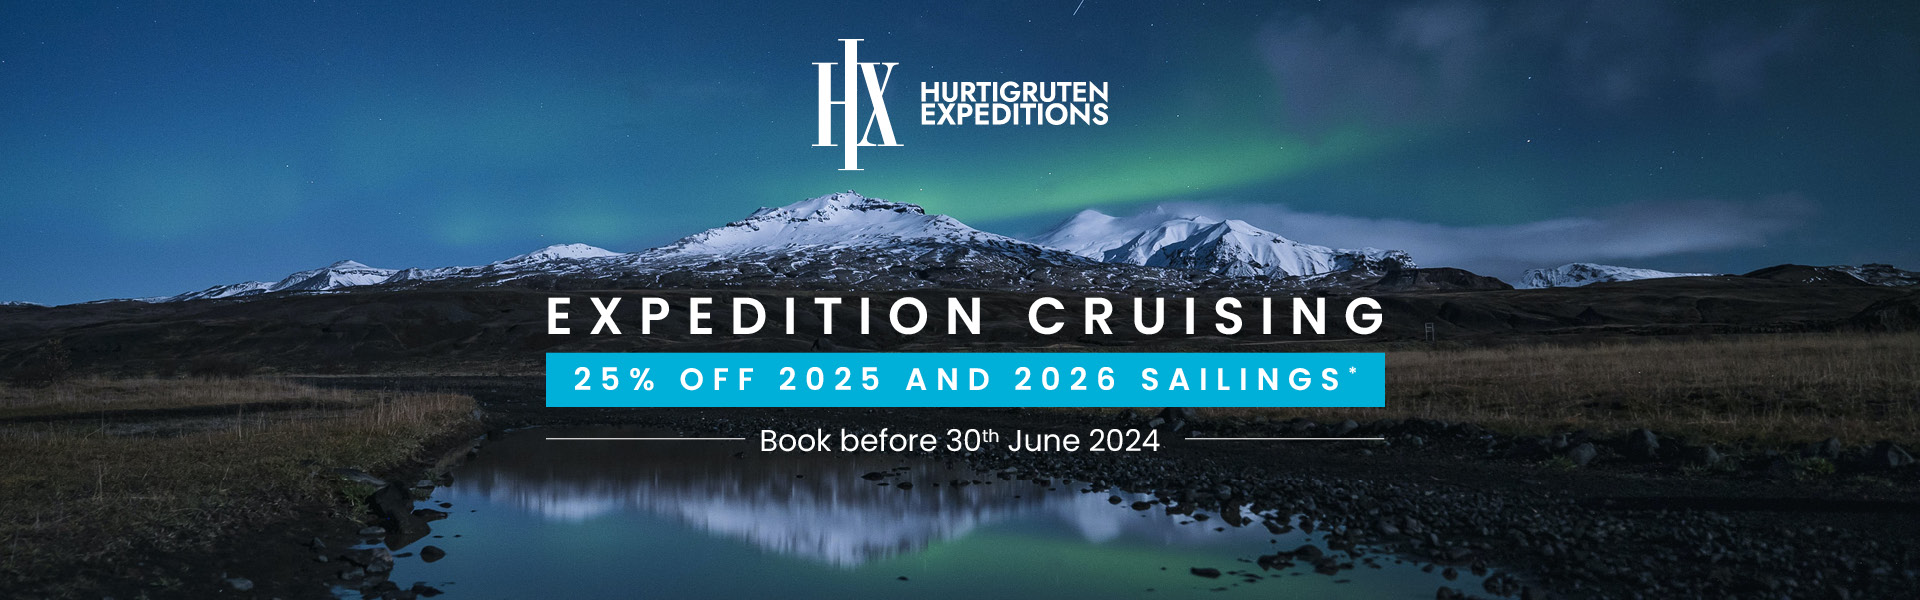 HX Expeditions - Huge Savings